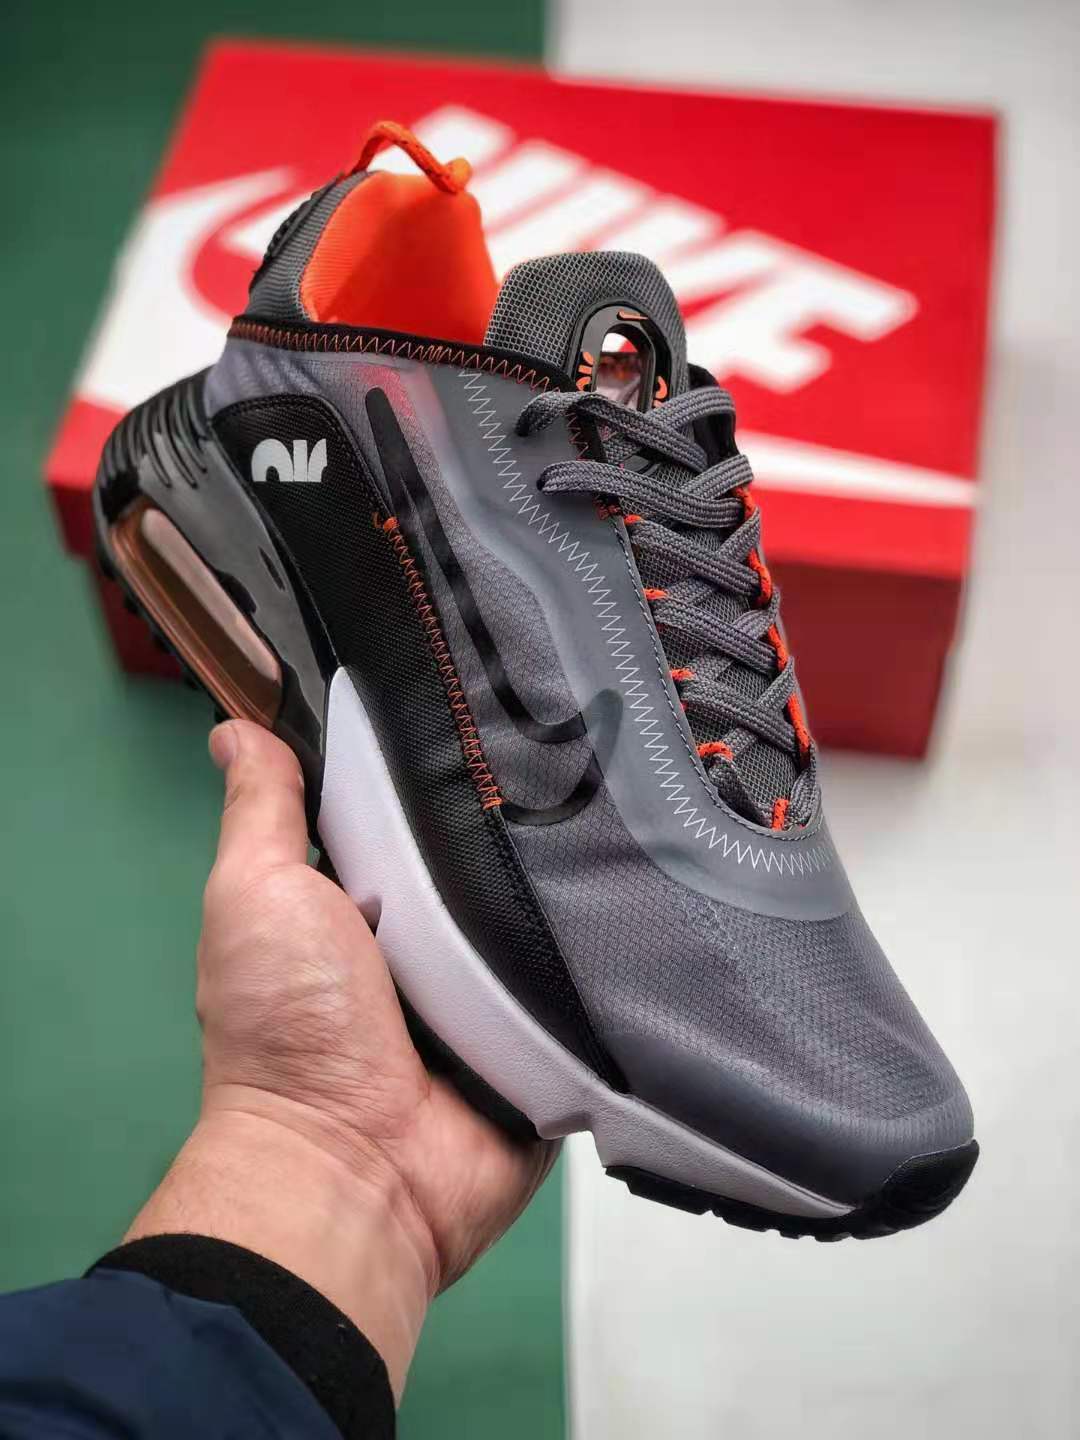 Nike Air Max 2090 Silver Grey Black Orange CT7698-012 - Stylish and Versatile Sneakers for Men